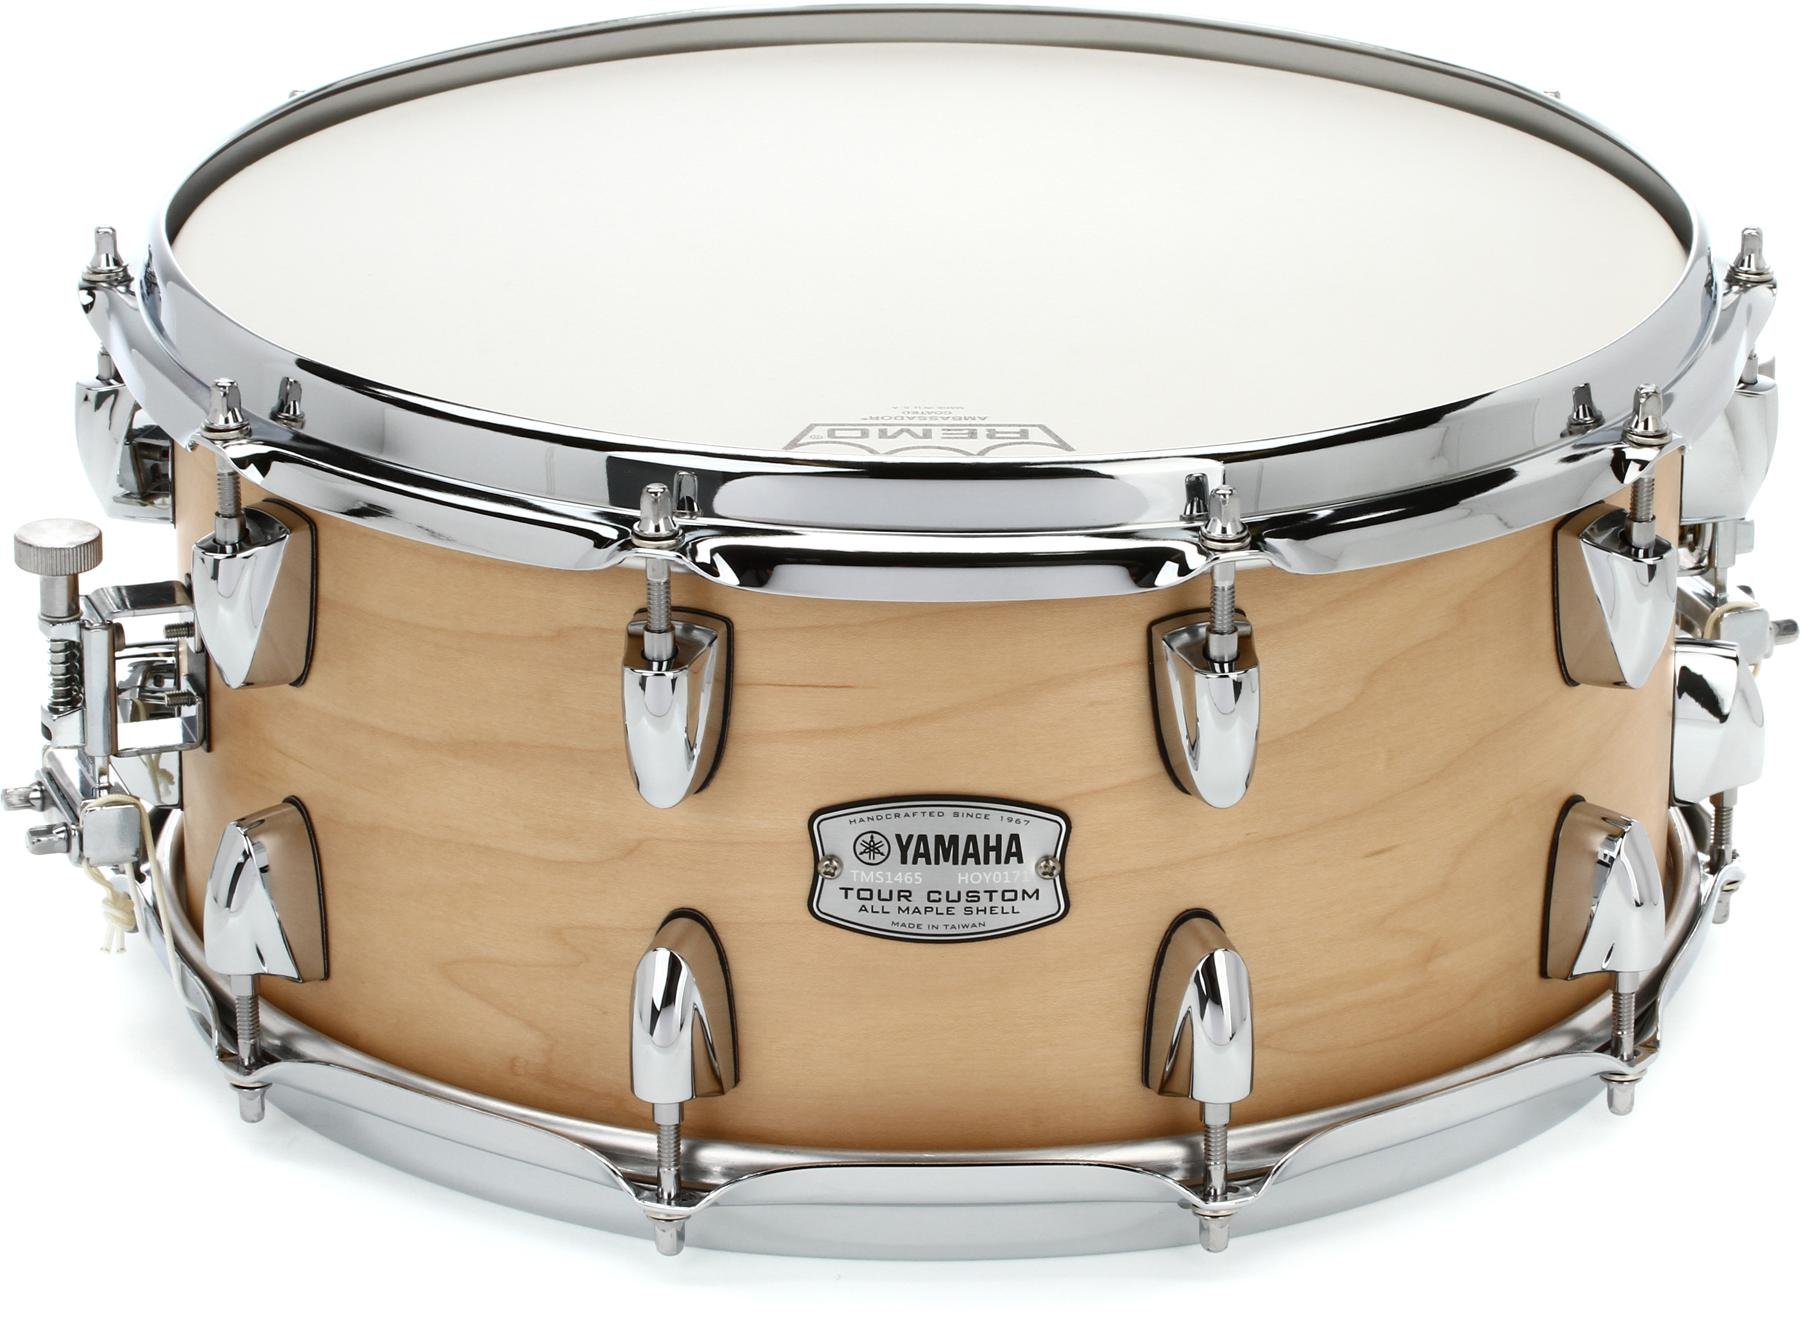 Yamaha Tour Custom Snare Drum - 14 x 6.5 inch - Butterscotch Satin 